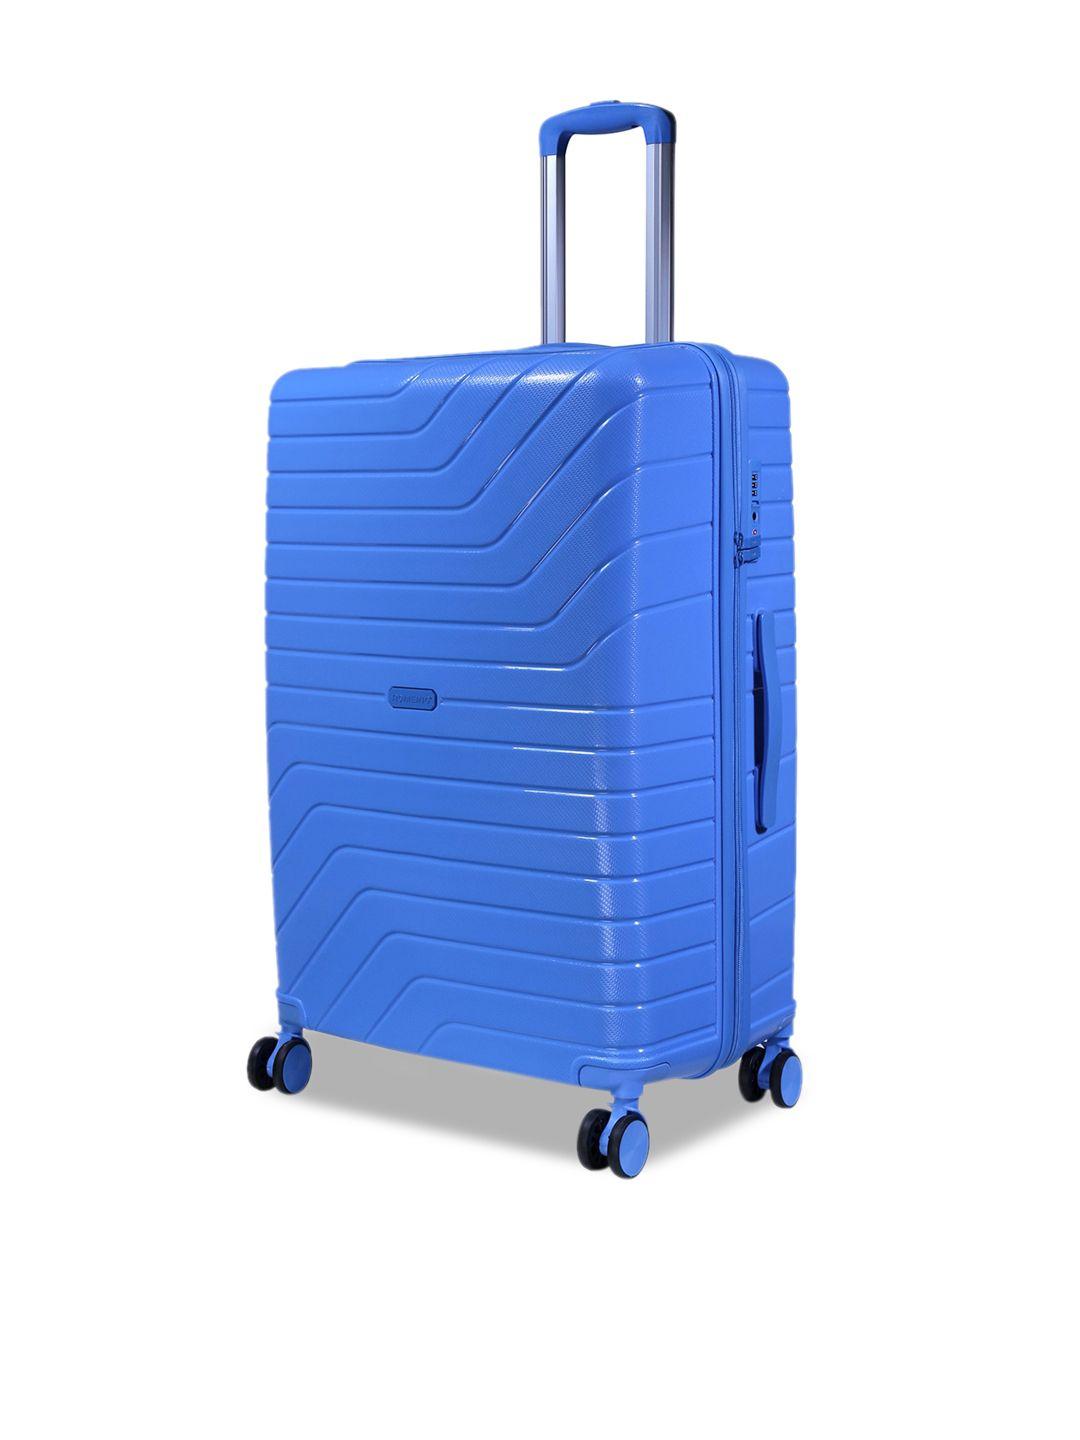 romeing tuscany blue textured hard-sided large polypropylene trolley suitcase